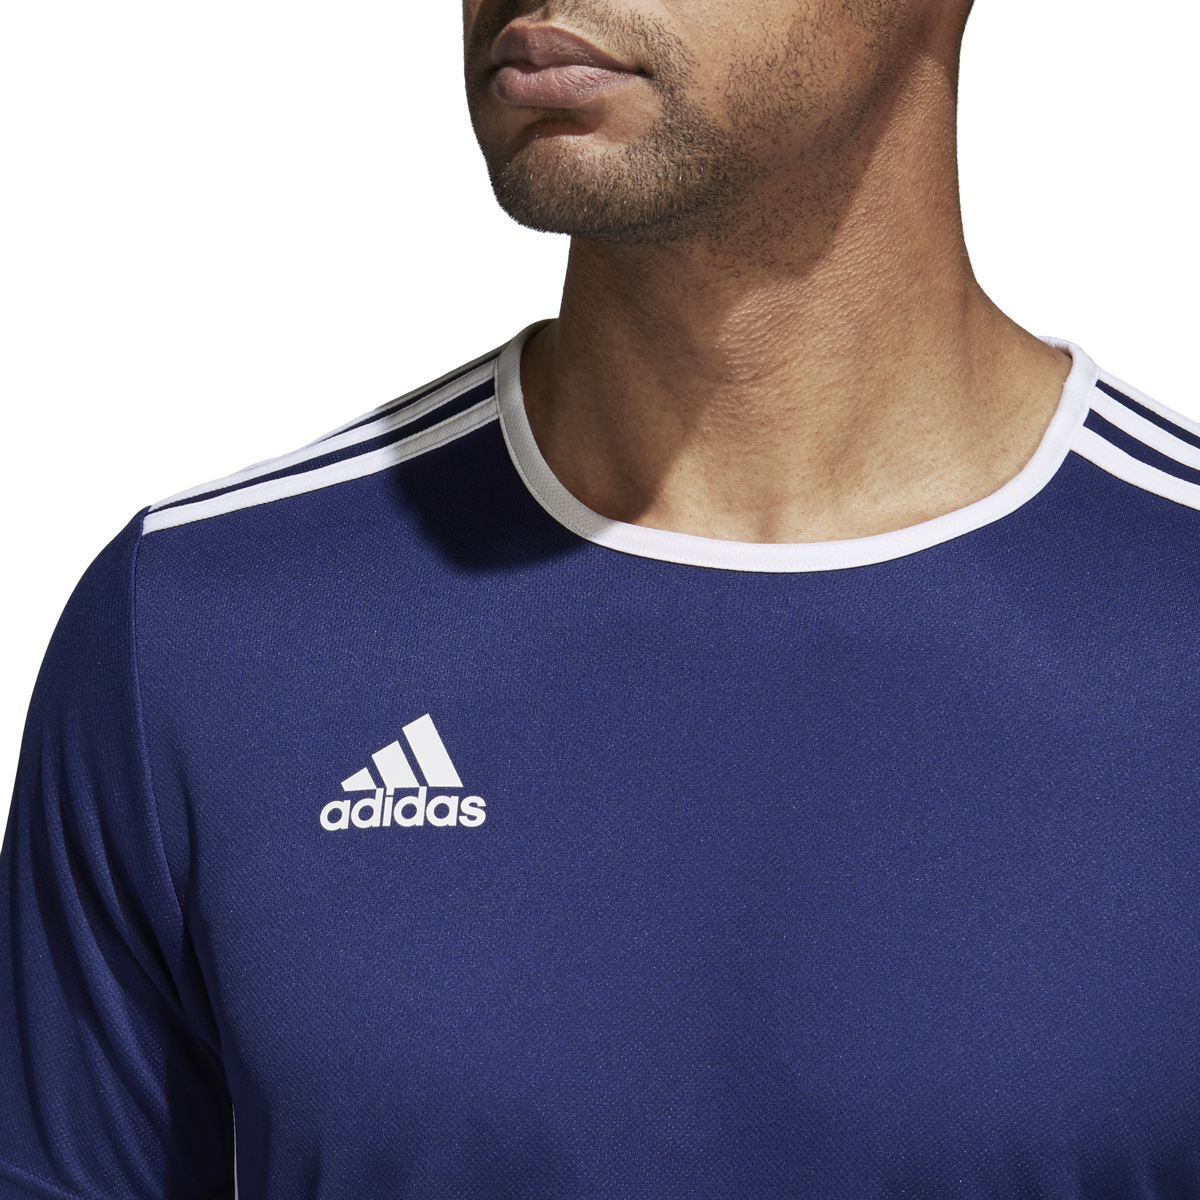 Adidas DARK BLUE/WHITE Men's Entrada ClimaLite Soccer Shirt, US Small - image 4 of 6